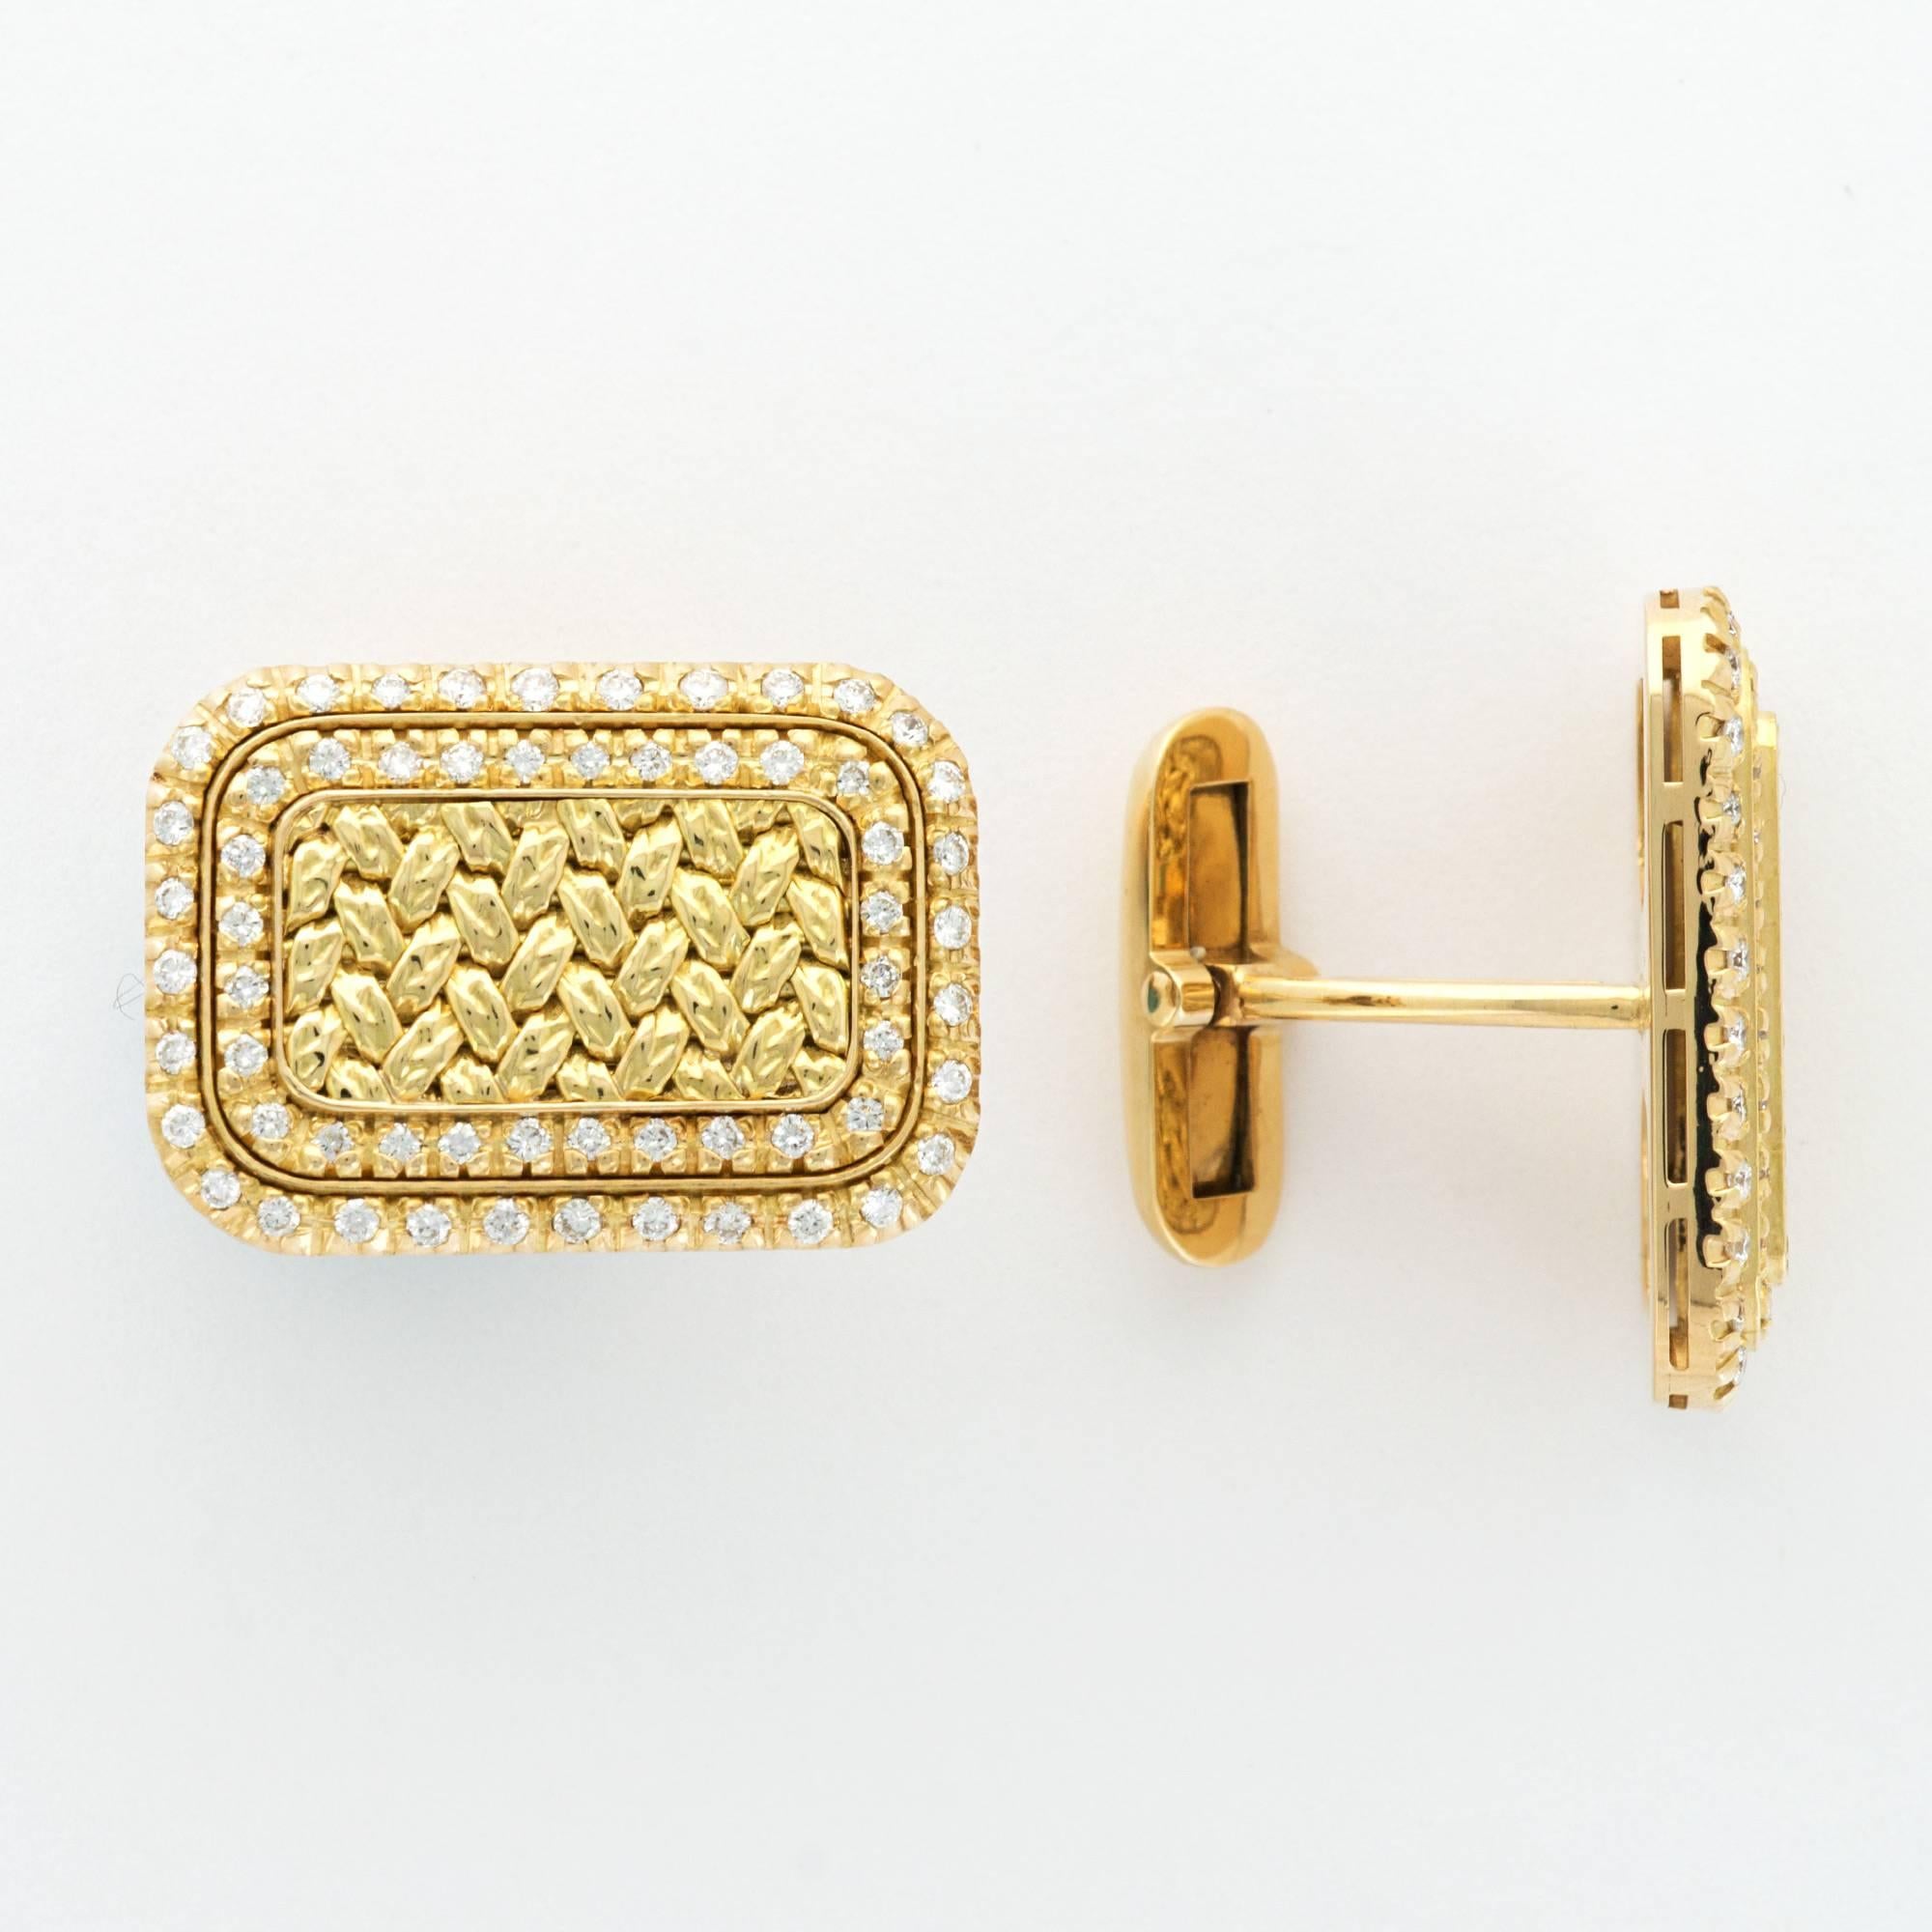 Women's or Men's Piaget ladies Yellow Gold Diamond Pearl Wristwatch and Cufflink Set